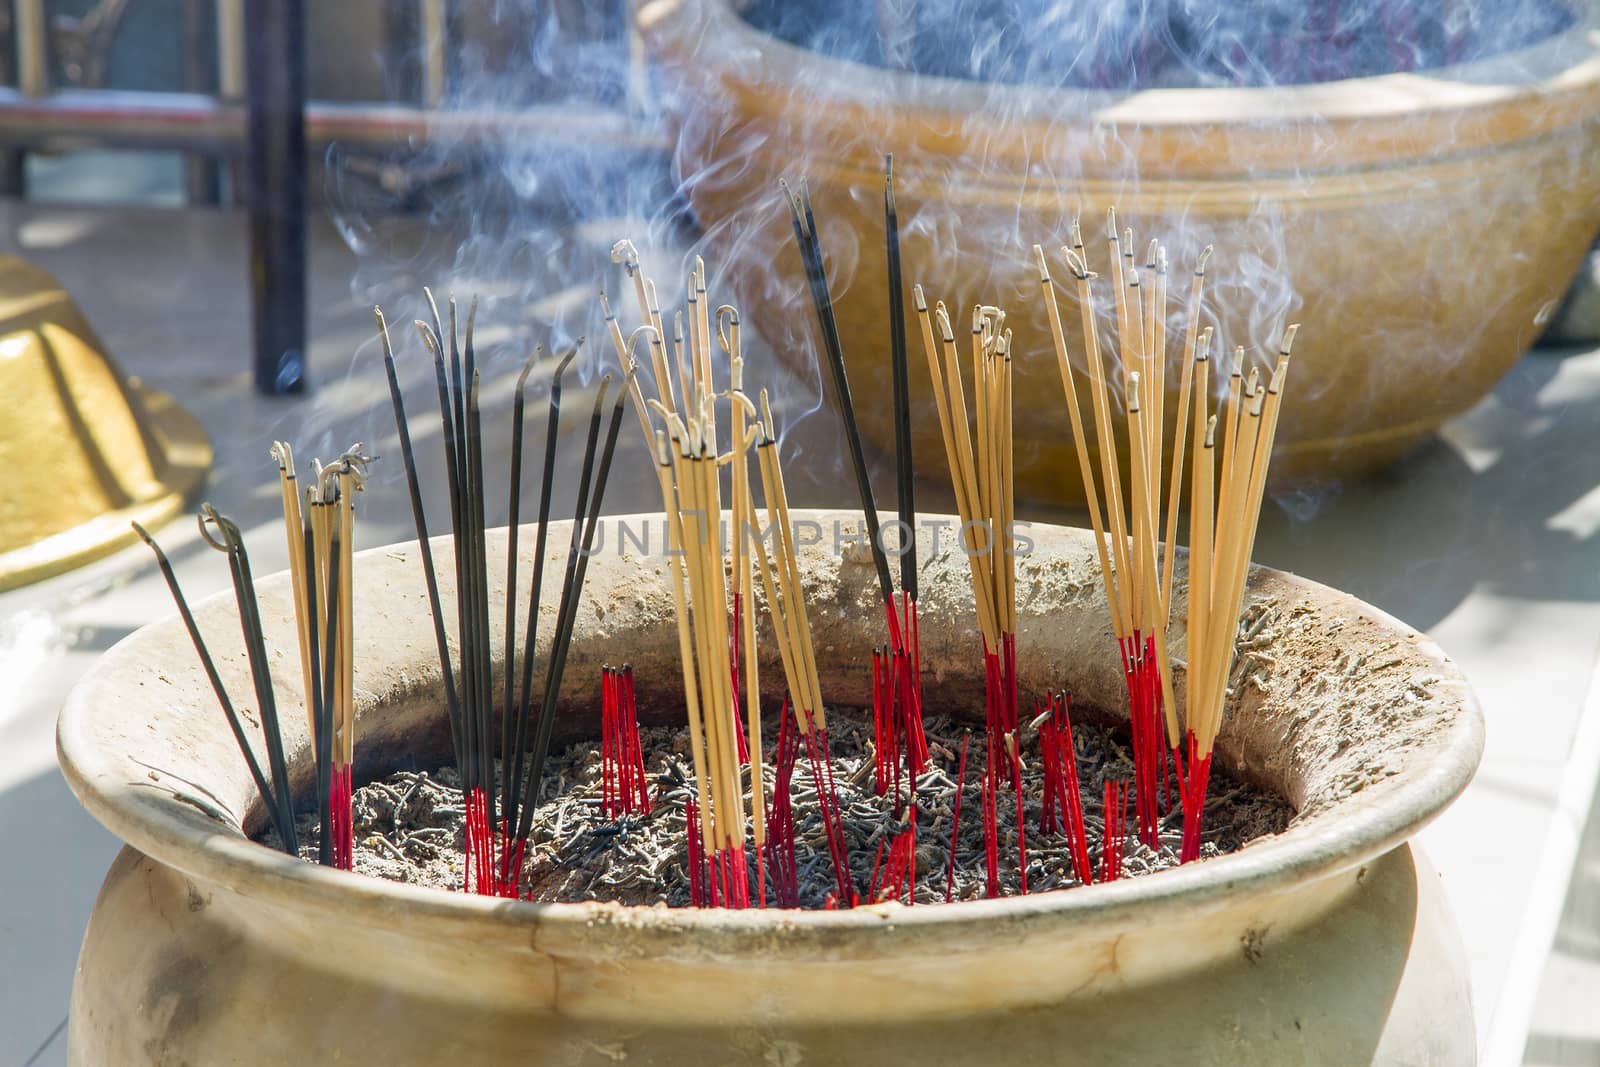 Incense burner with orange incense and black smoke.